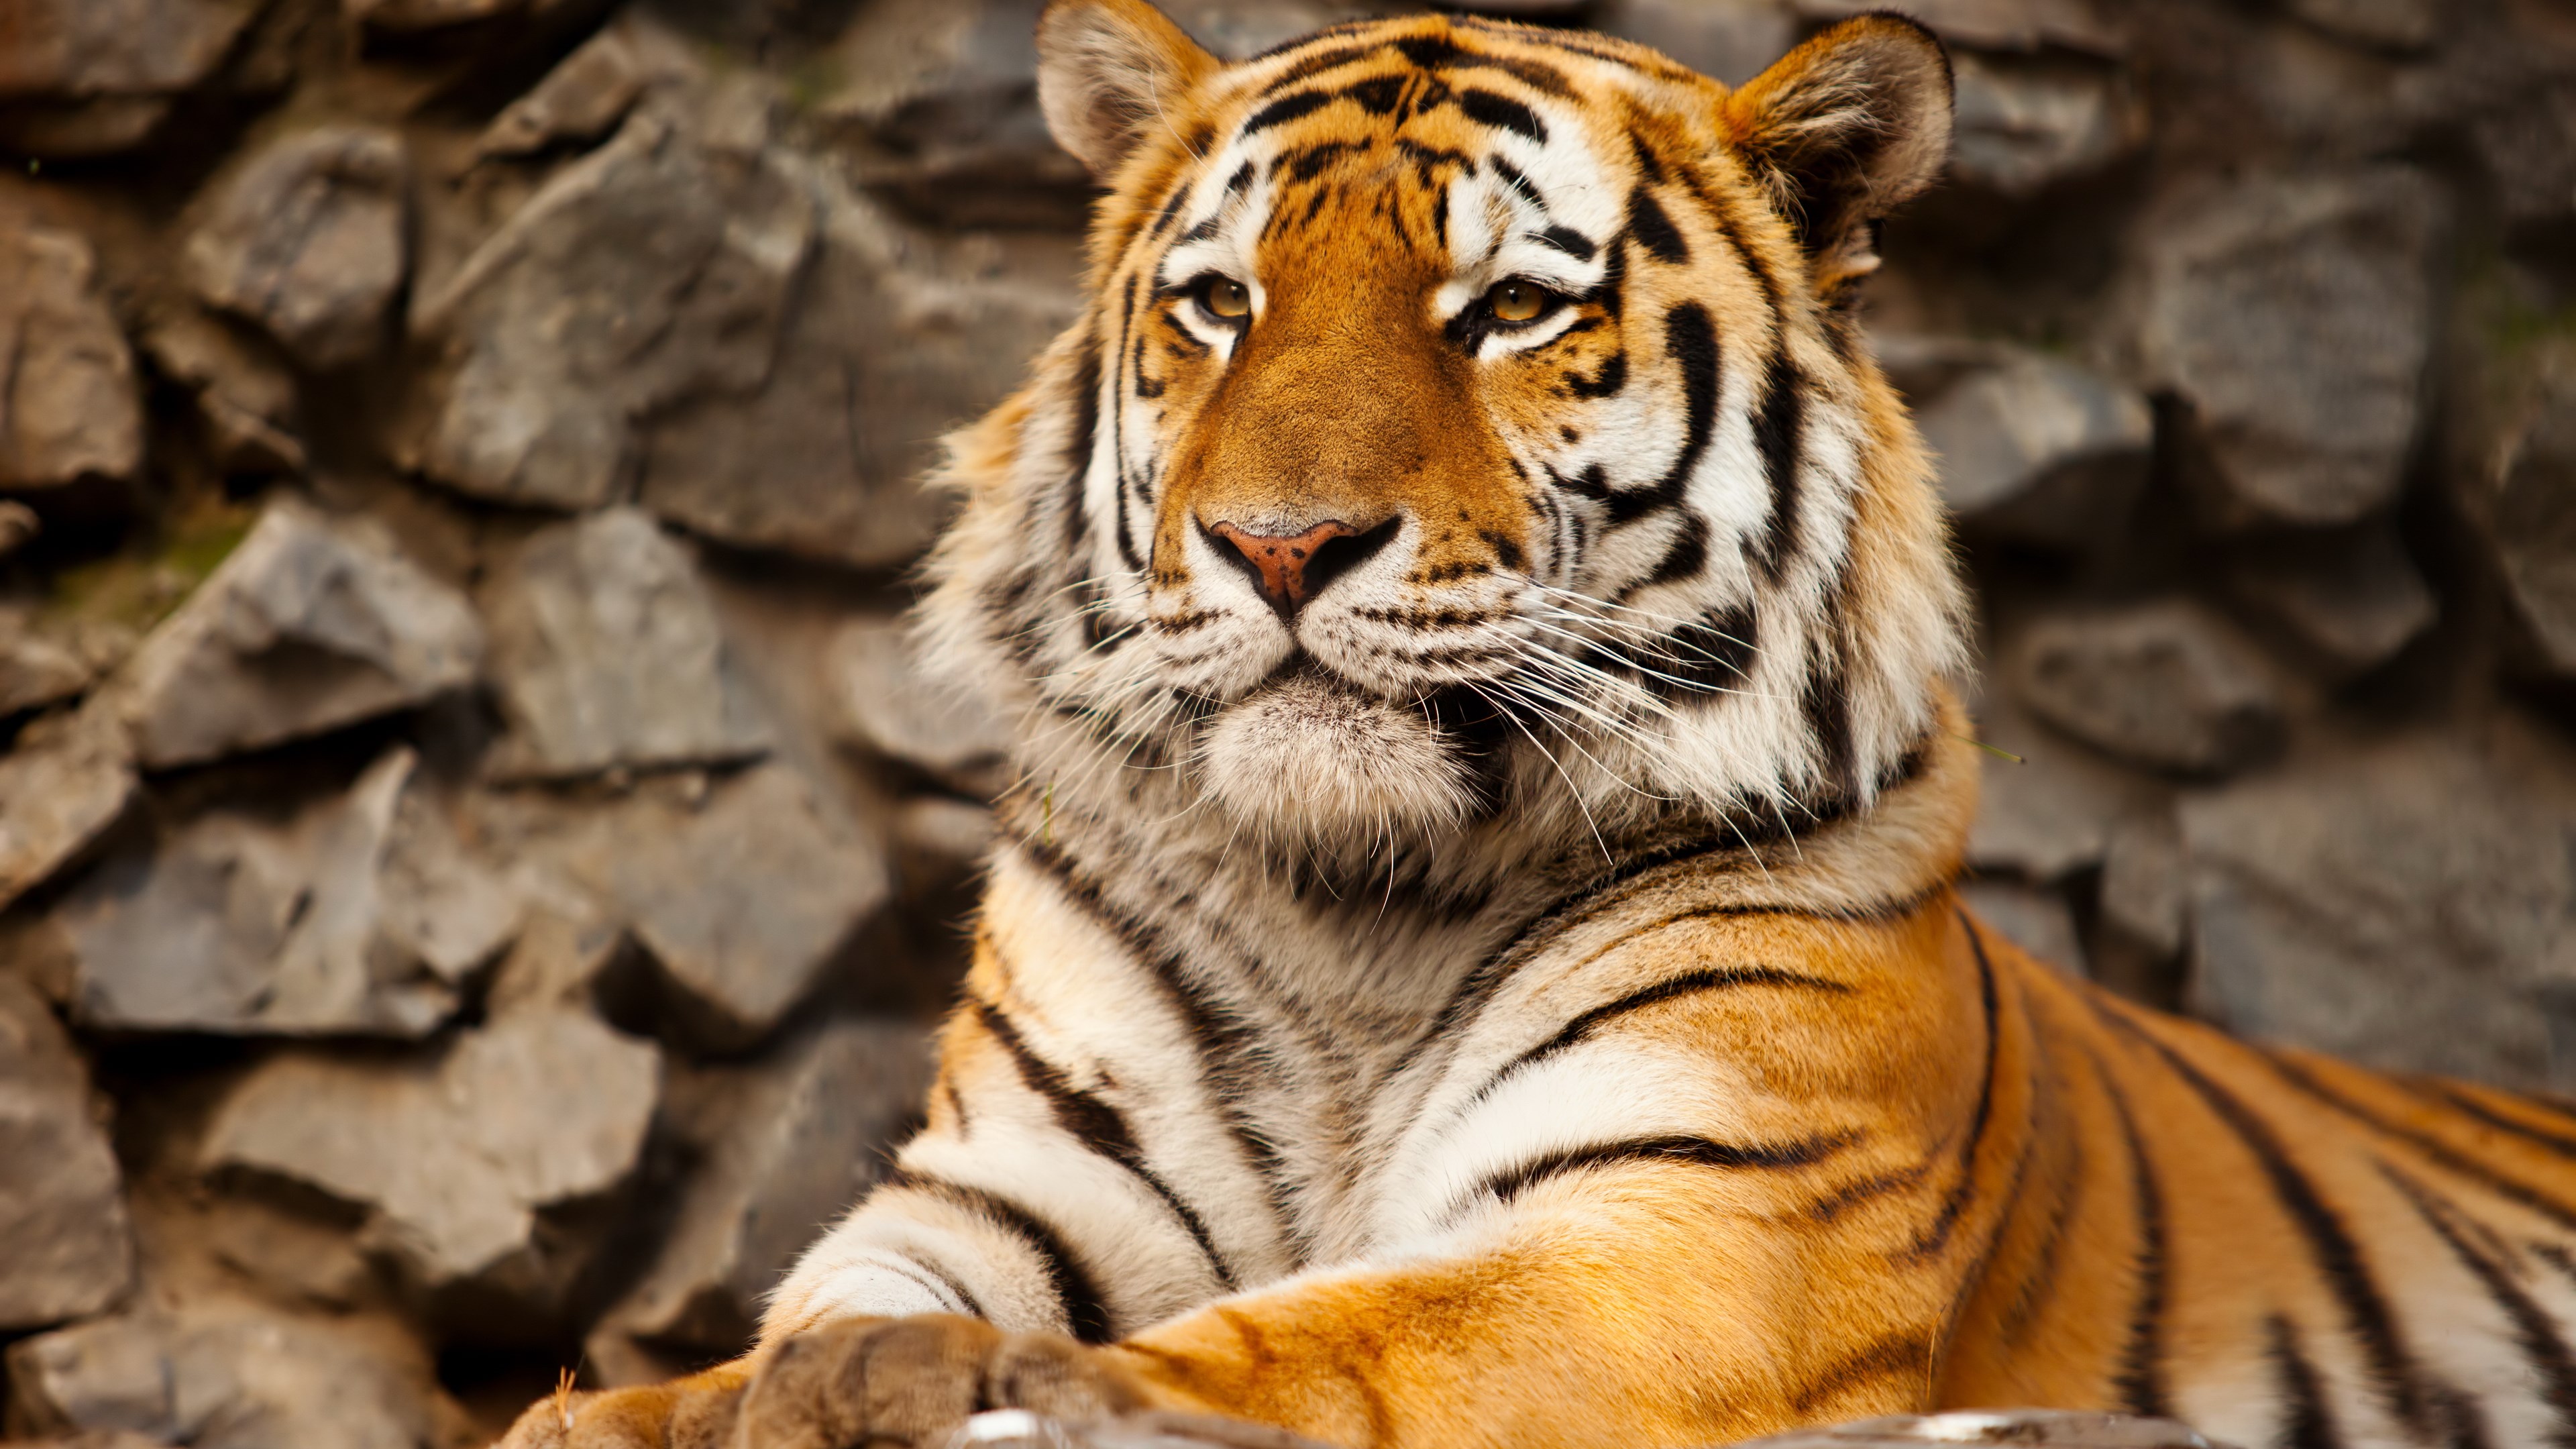 🔥 Free Download Tiger Wallpaper 4K Tiger Wallpaper 4K Tiger Images Hd